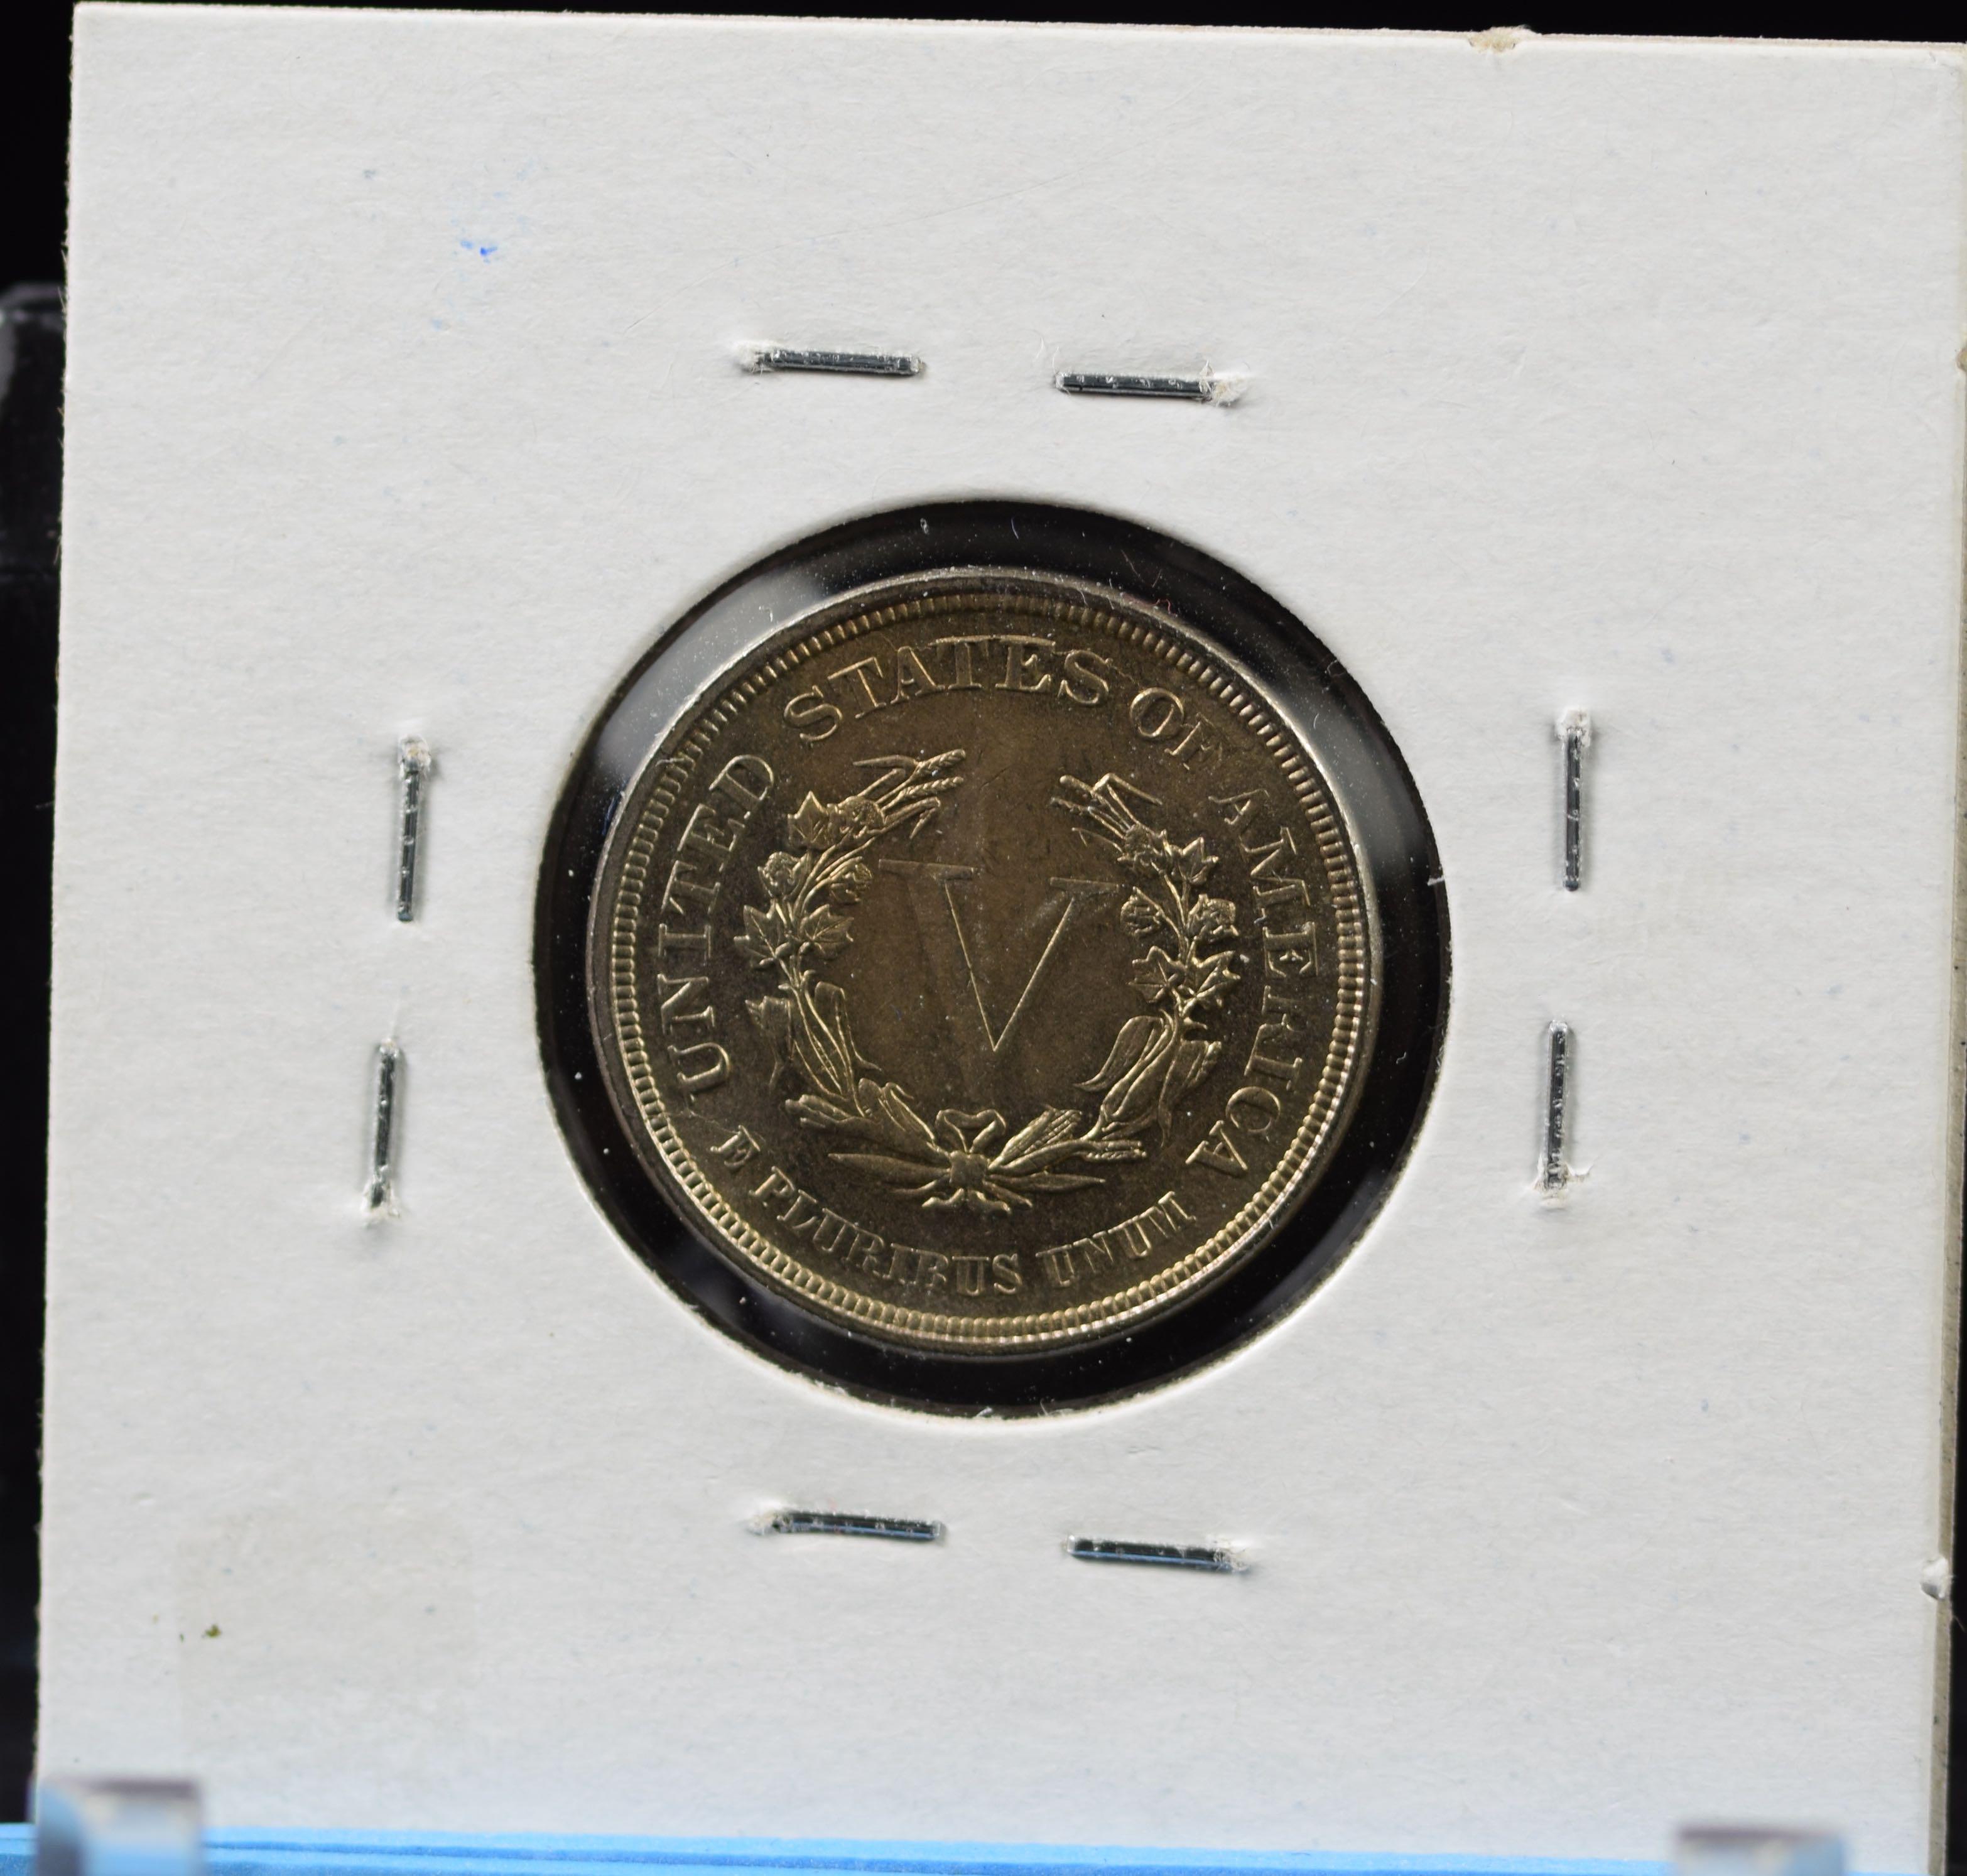 1883 No Cent Liberty Nickel Sharp MS64